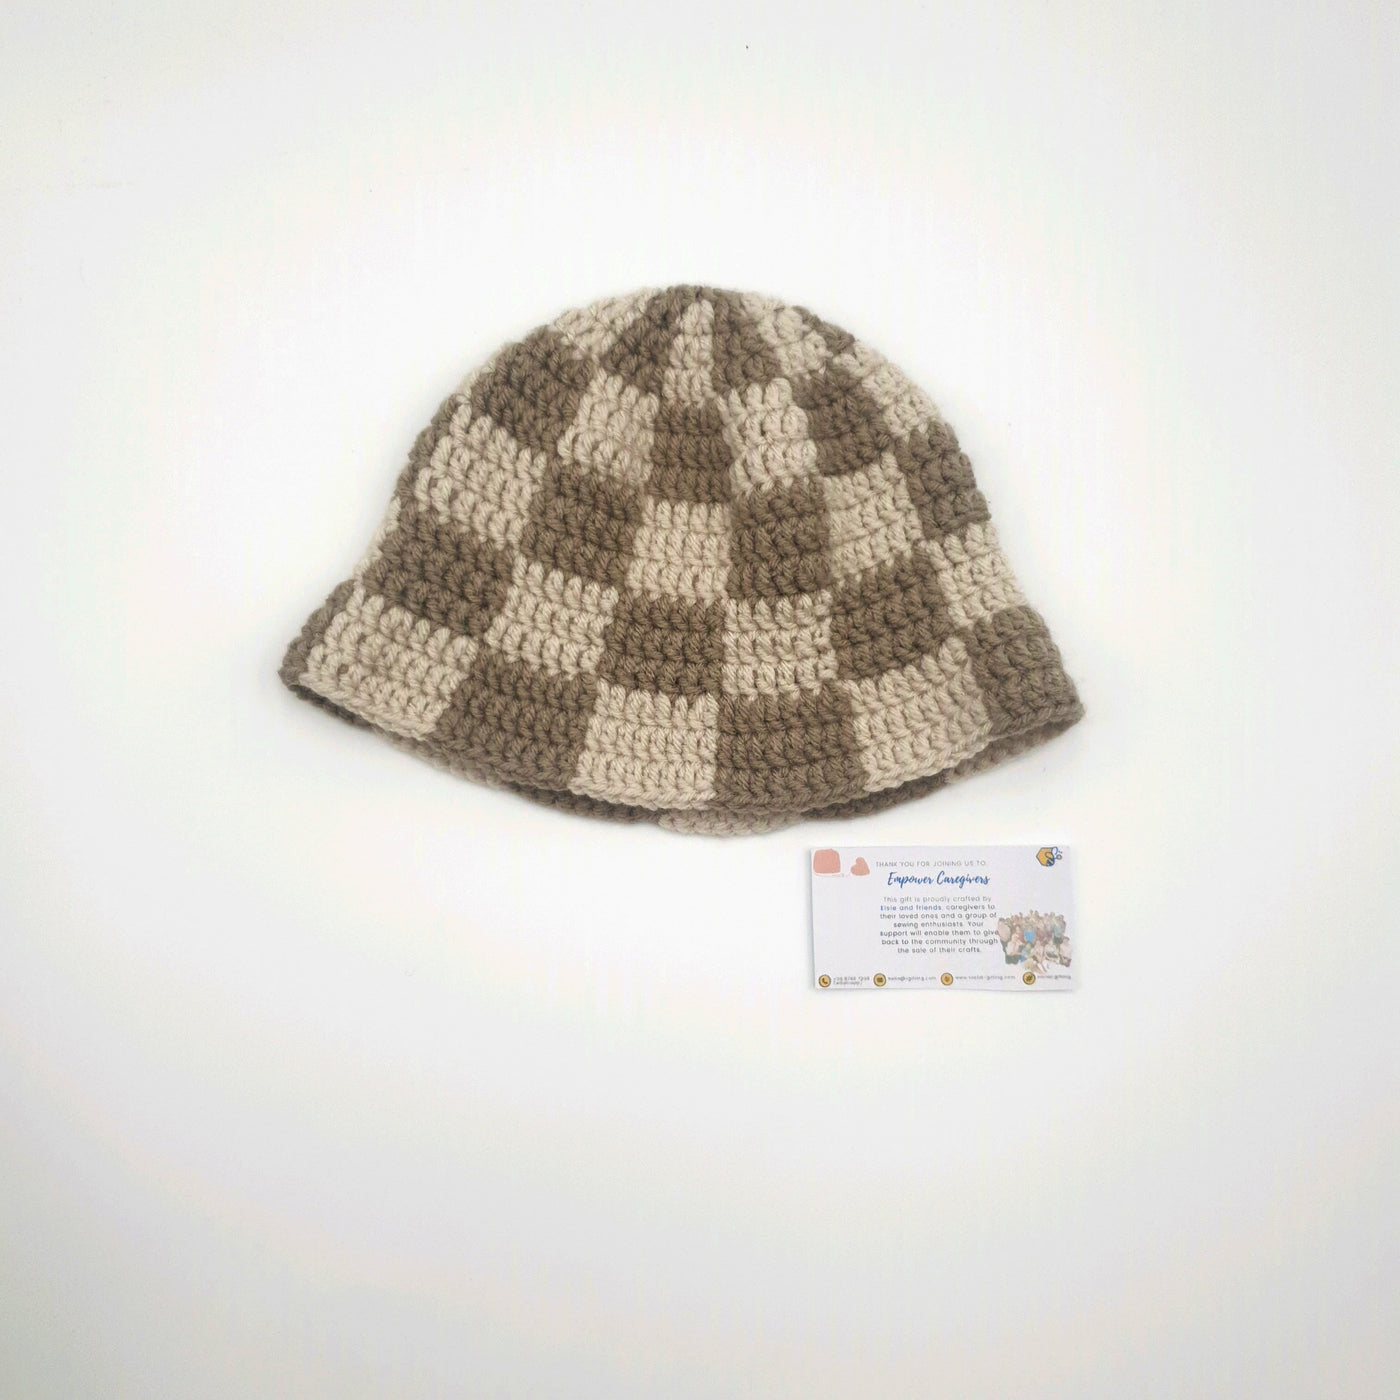 Checkered Crocheted Bucket Hat